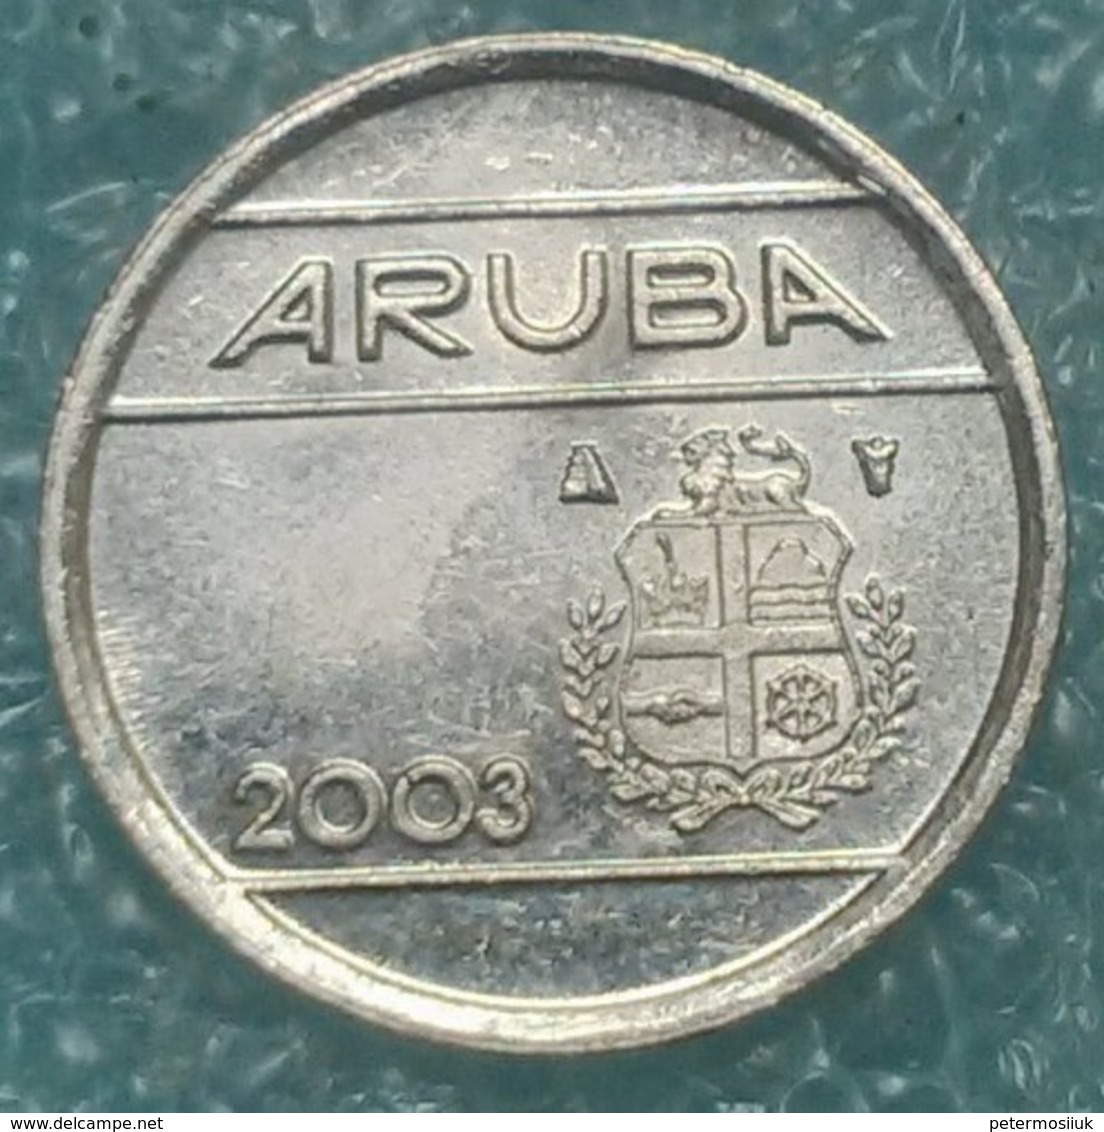 Aruba 5 Cents, 2003 - Netherlands Antilles